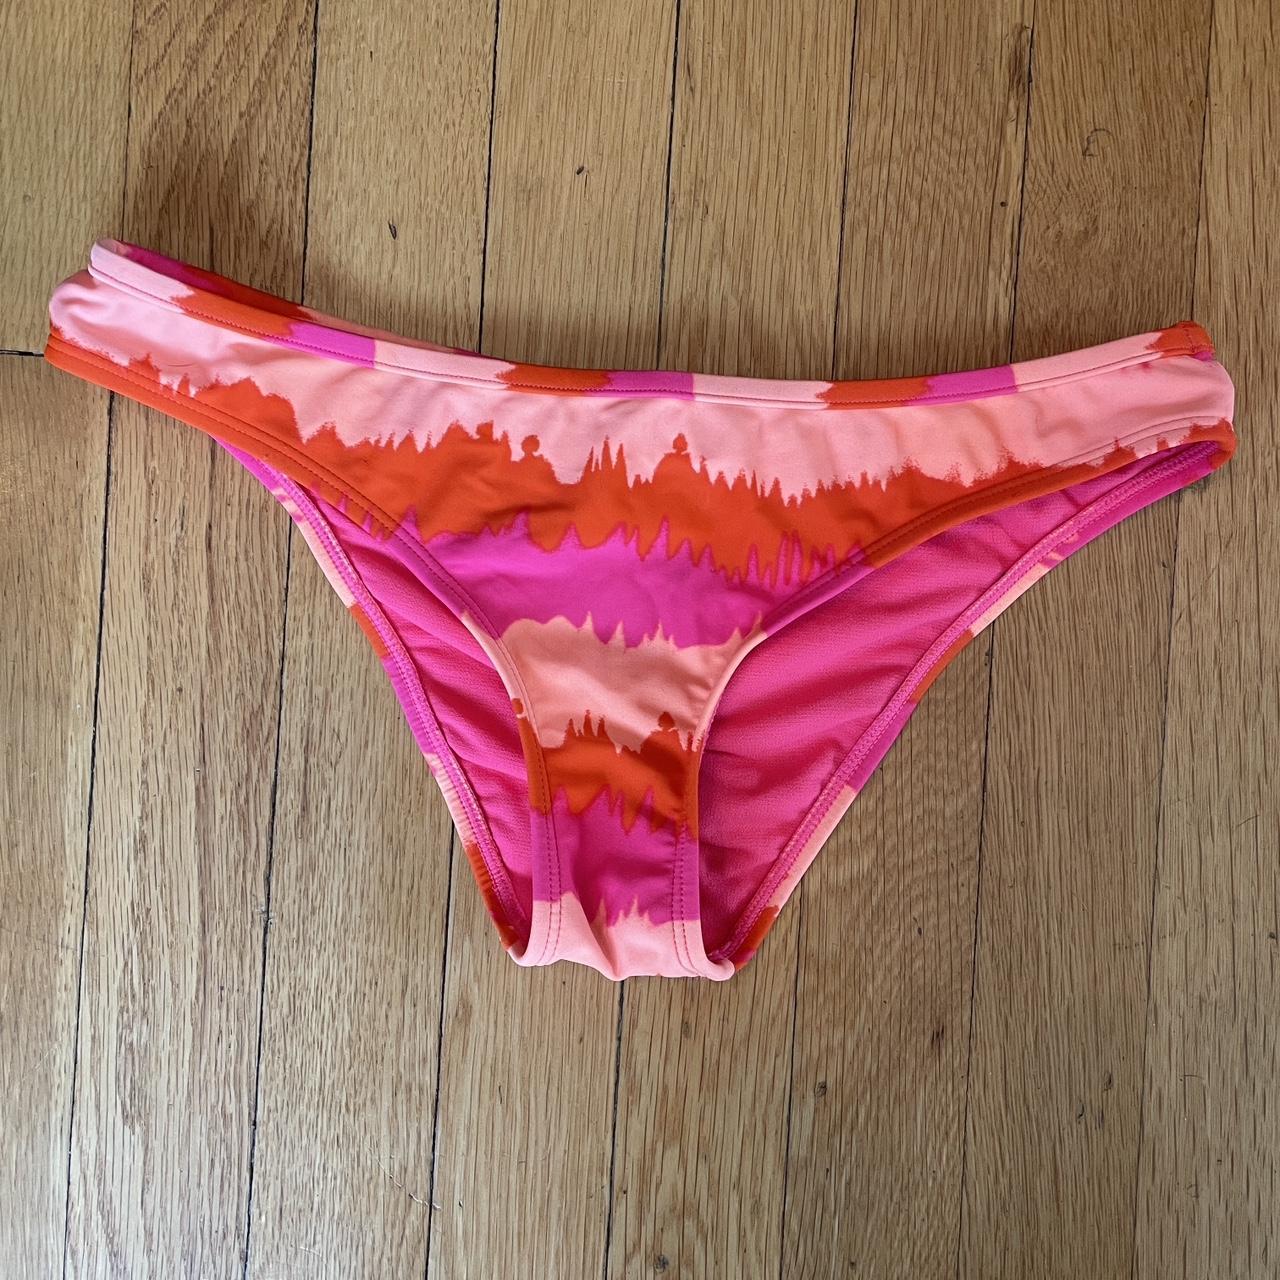 Roxy Women's Pink and Orange Bikinis-and-tankini-sets | Depop